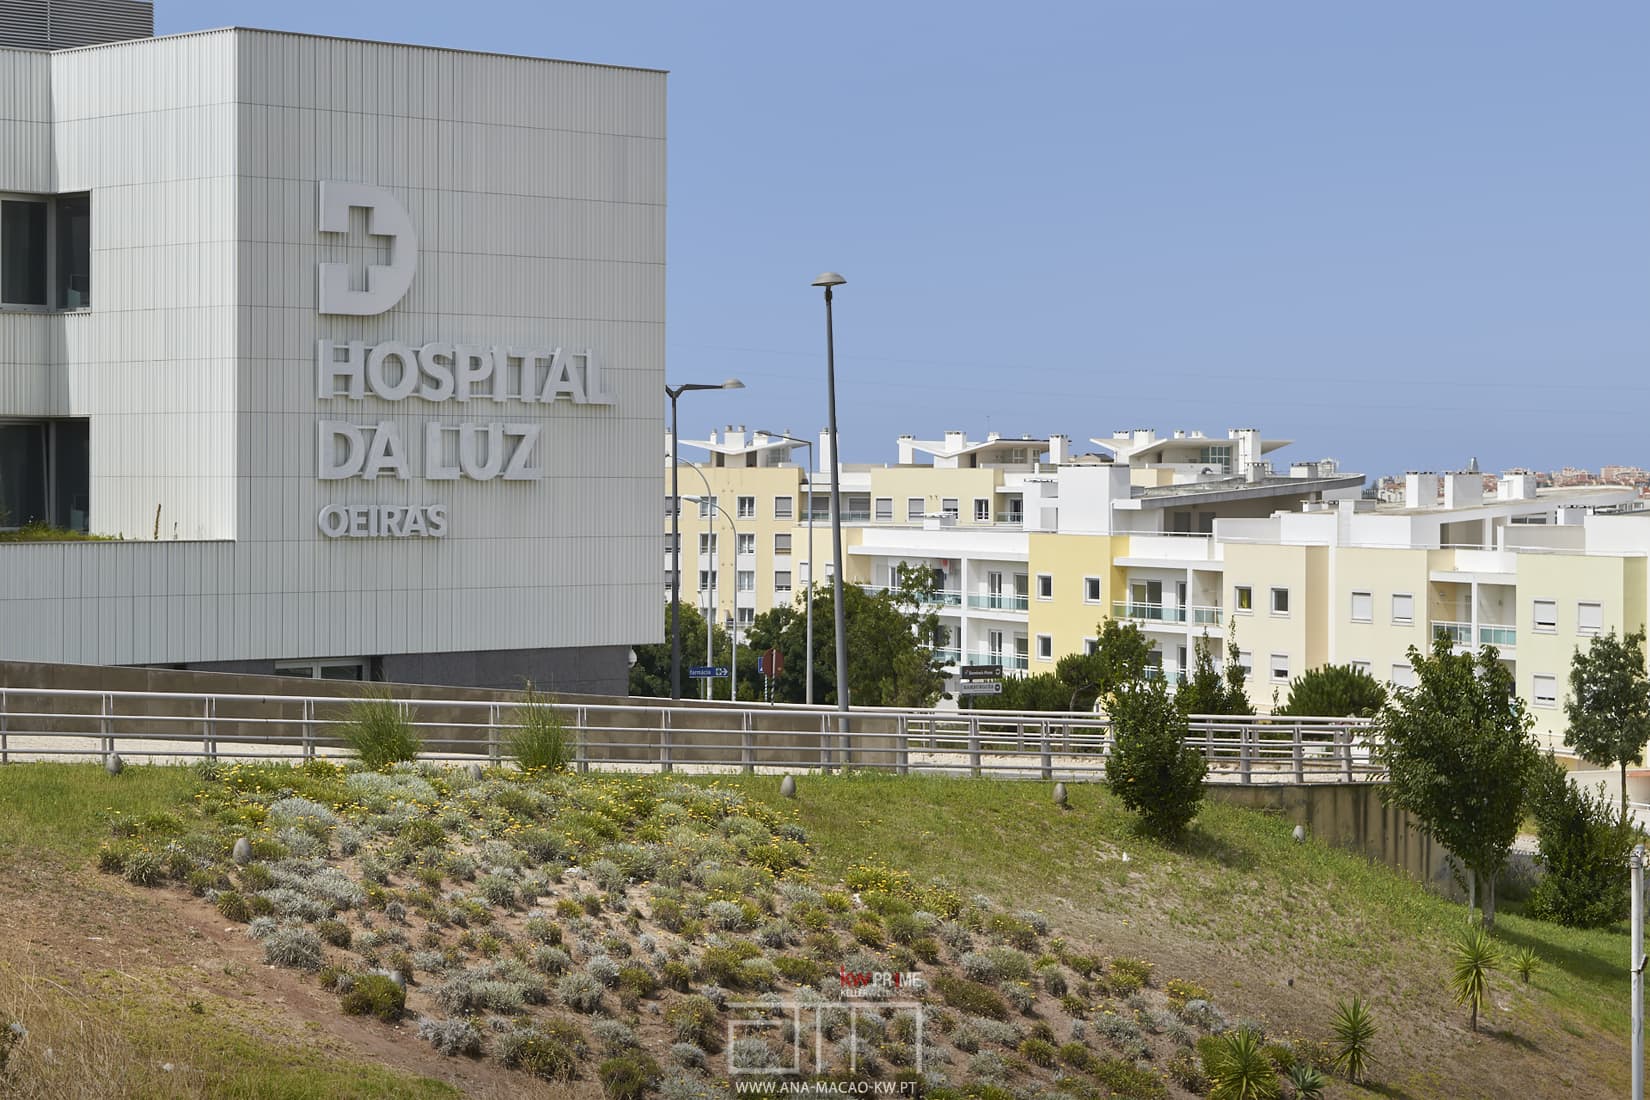 Hospital da Luz à côté du Forum Oeiras